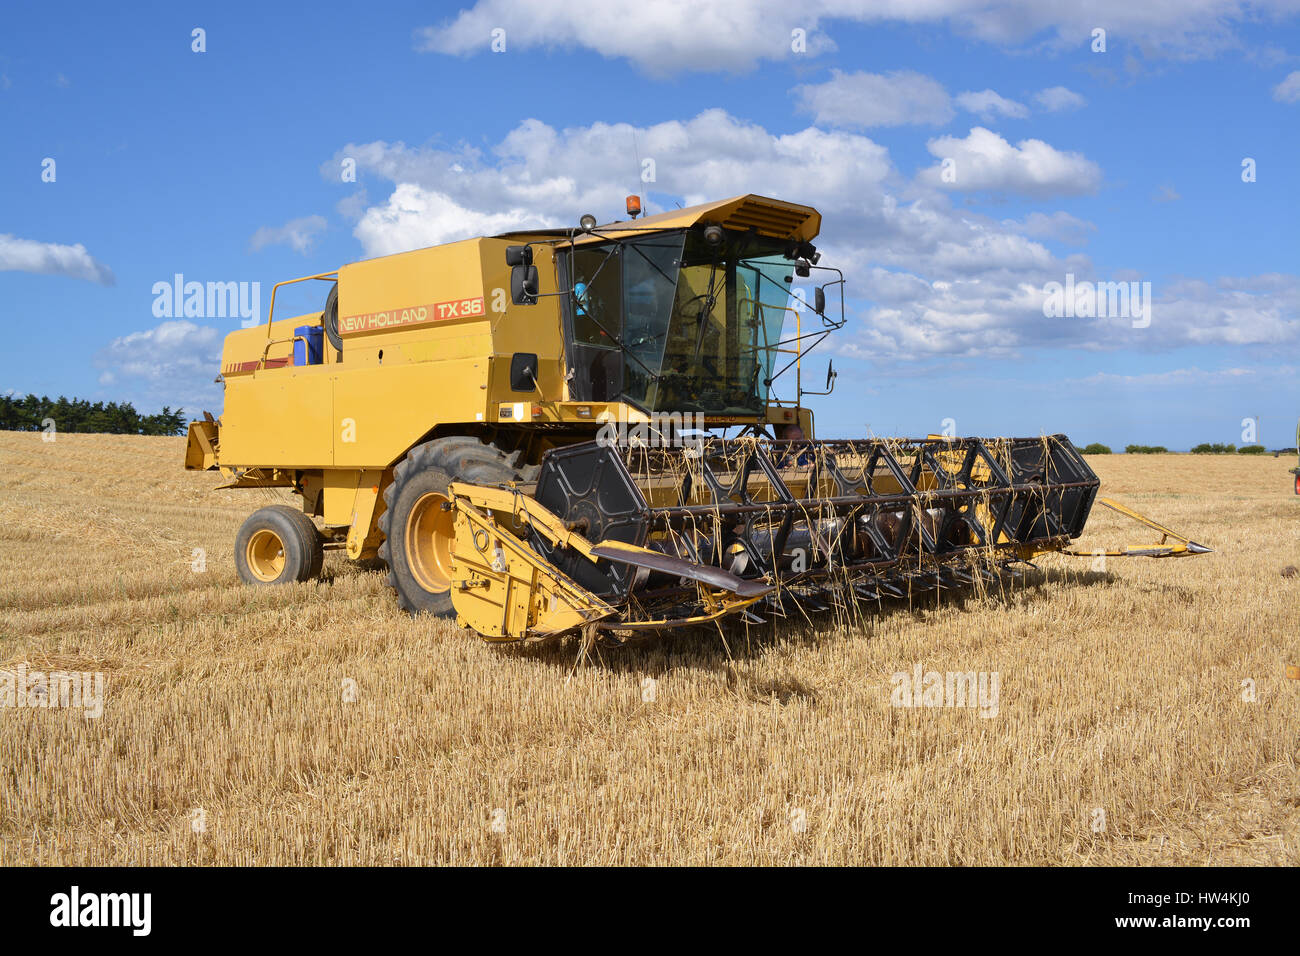 New Holland TX36 Combine Harvester Stock Photo